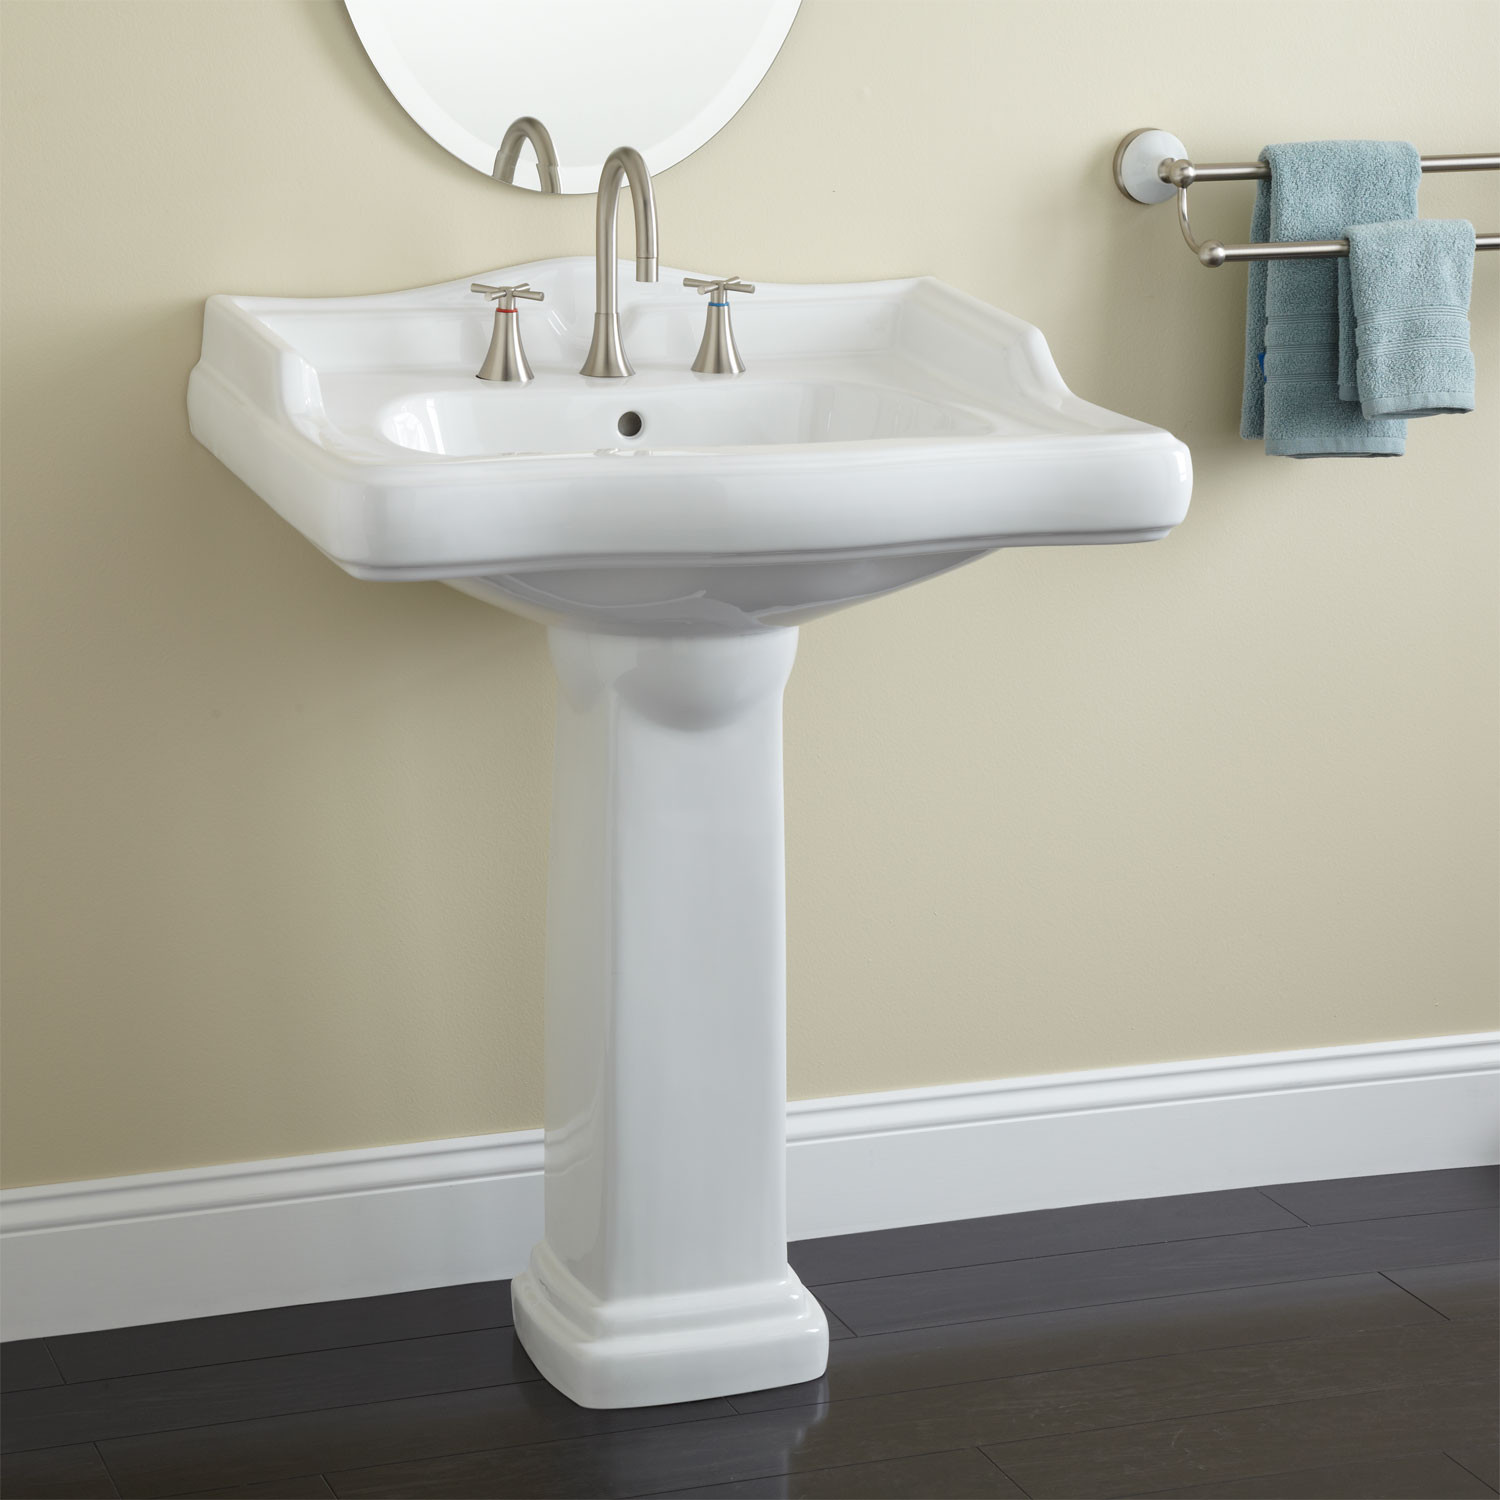 Best ideas about Pedestal Bathroom Sinks
. Save or Pin Dawes Pedestal Sink Now.